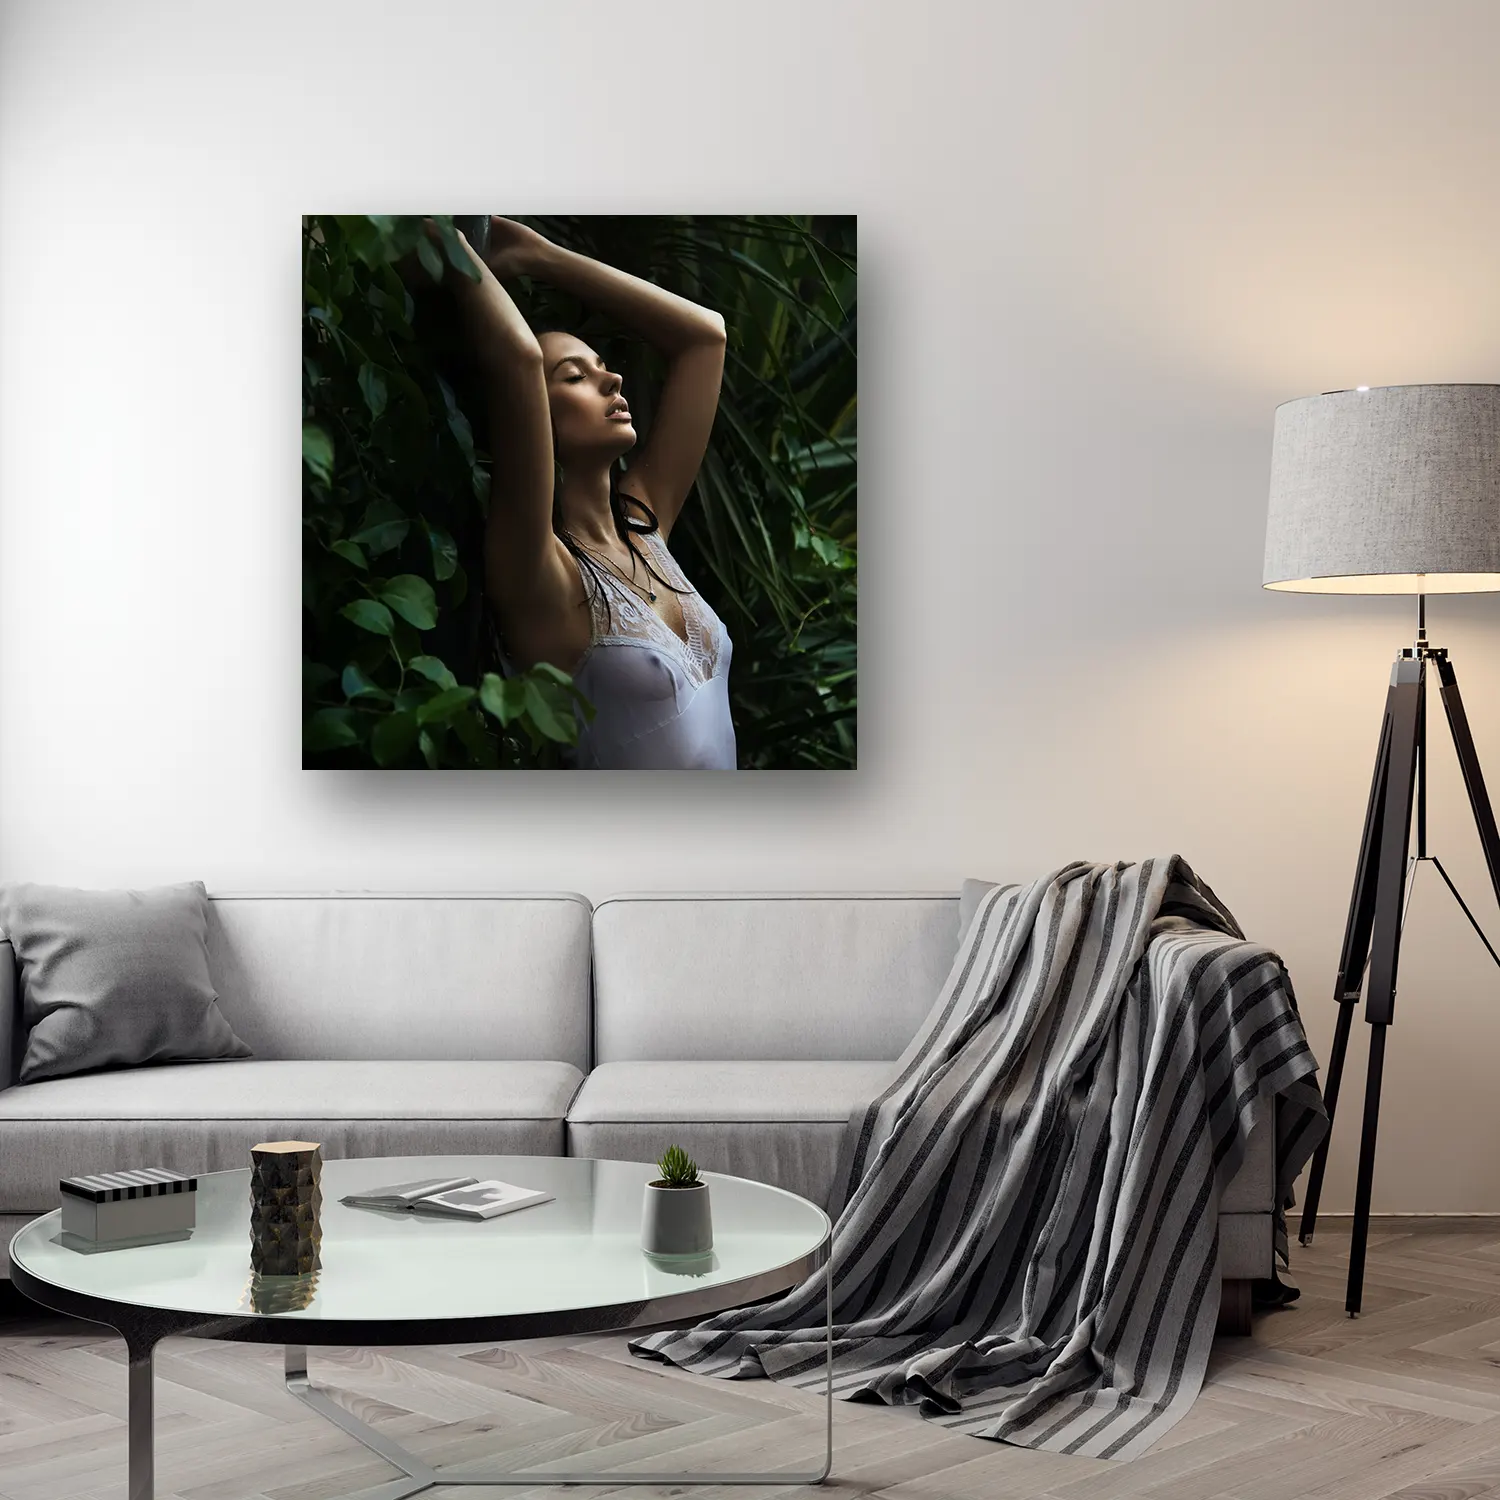 Size Variation 120x120 - Sensual Forest Girl - Fotokunst Wanddecoratie Vierkant